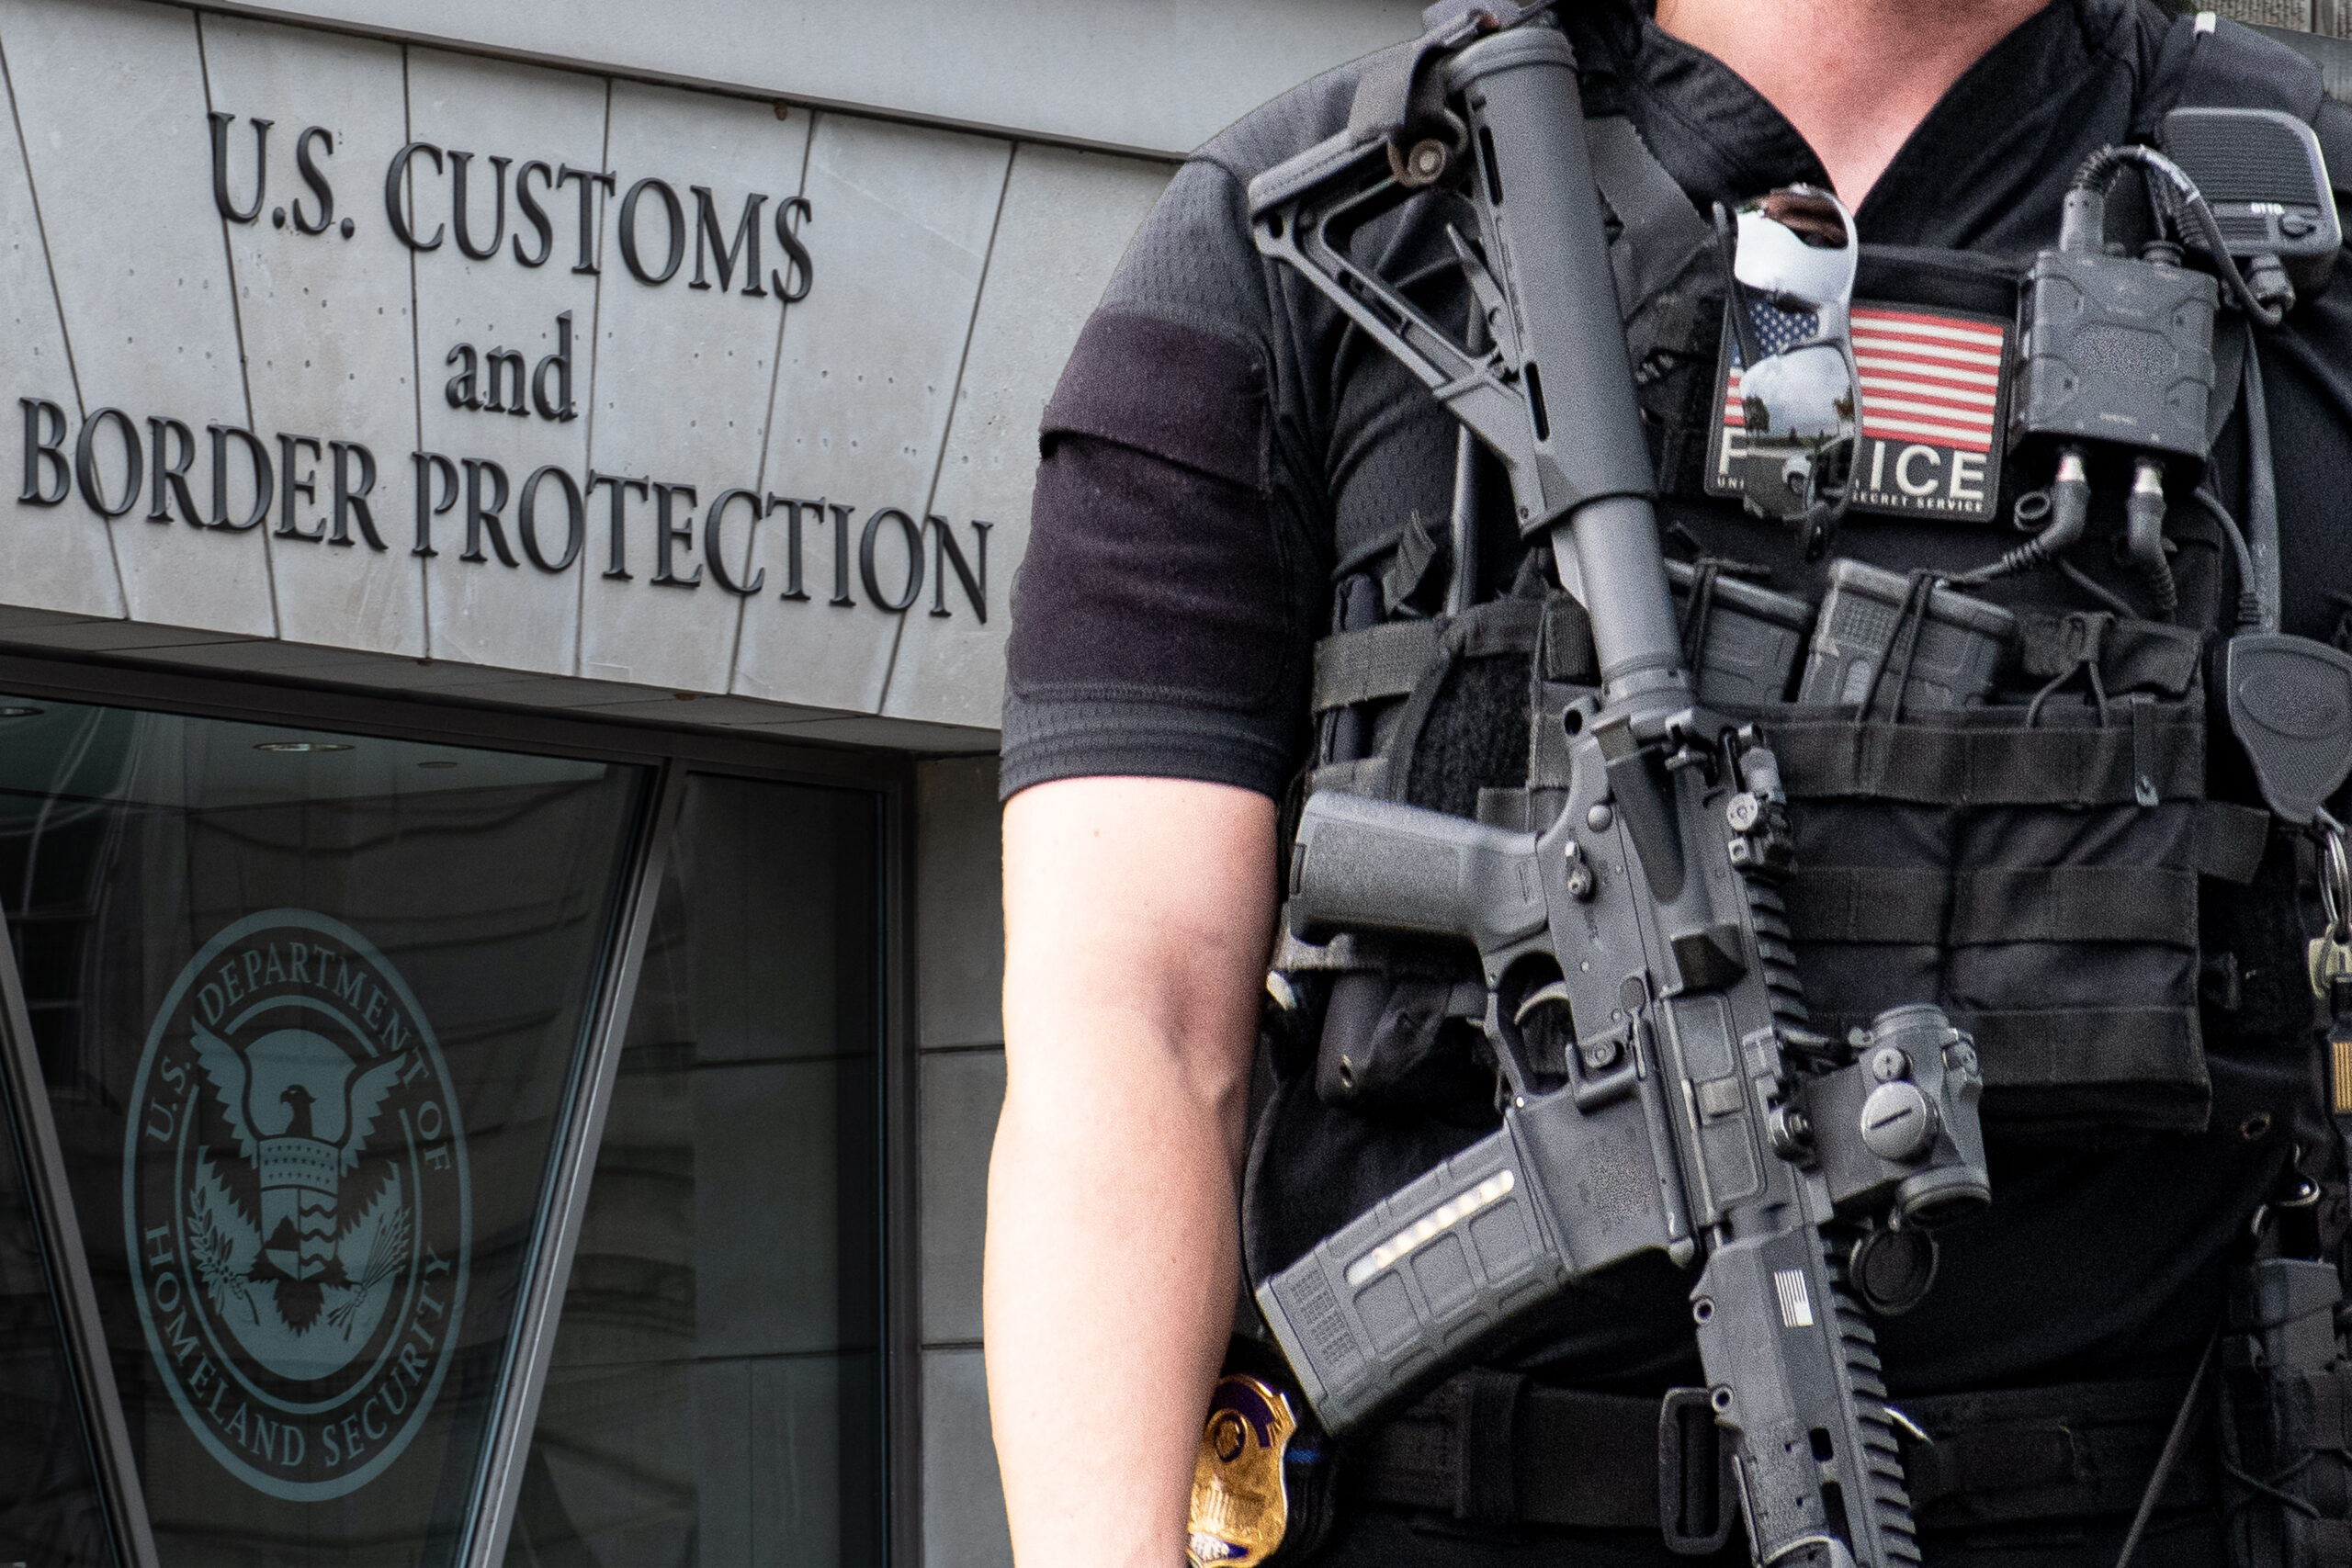 16 People On FBI’s Terror Watch-List Arrested At U.S. Border, Authorities Say